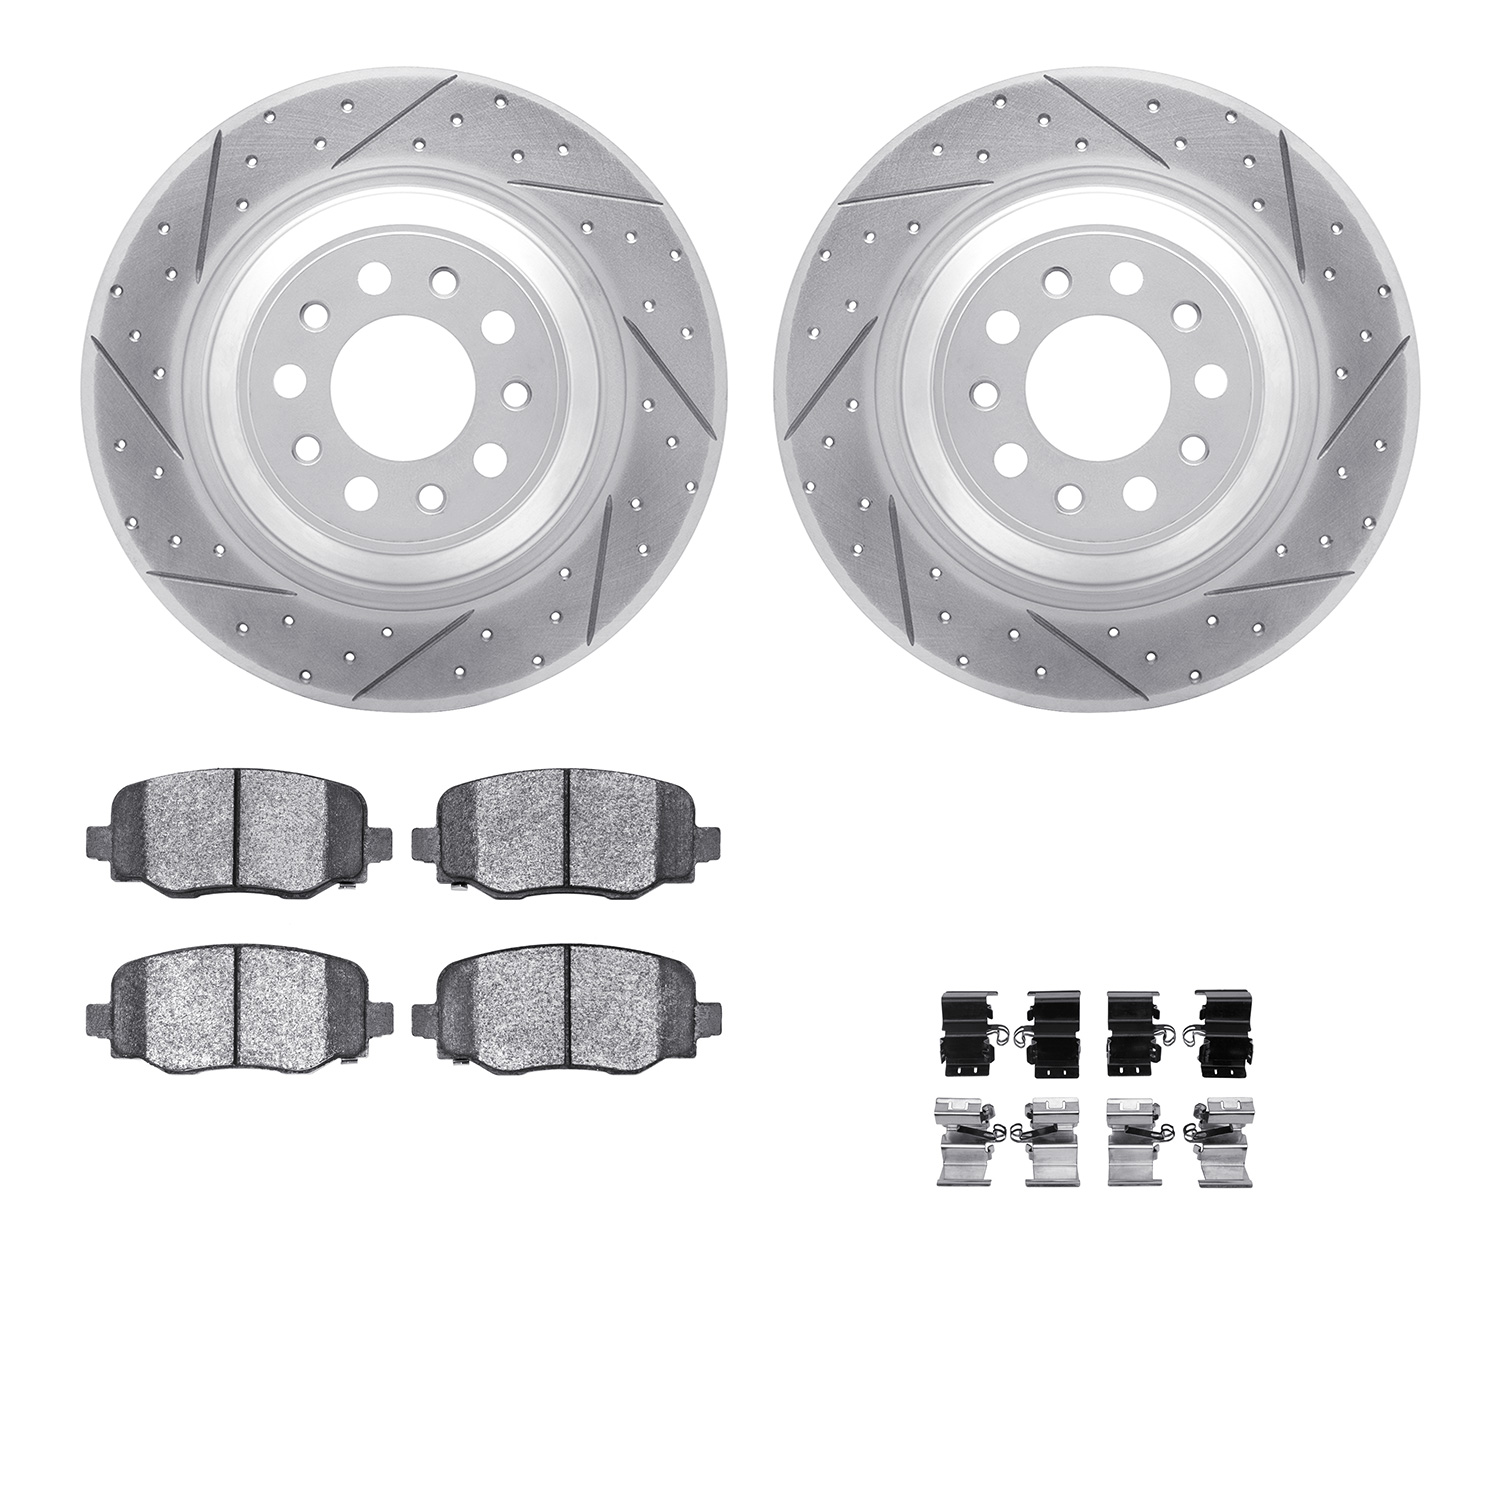 2512-42044 Geoperformance Drilled/Slotted Rotors w/5000 Advanced Brake Pads Kit & Hardware, Fits Select Mopar, Position: Rear